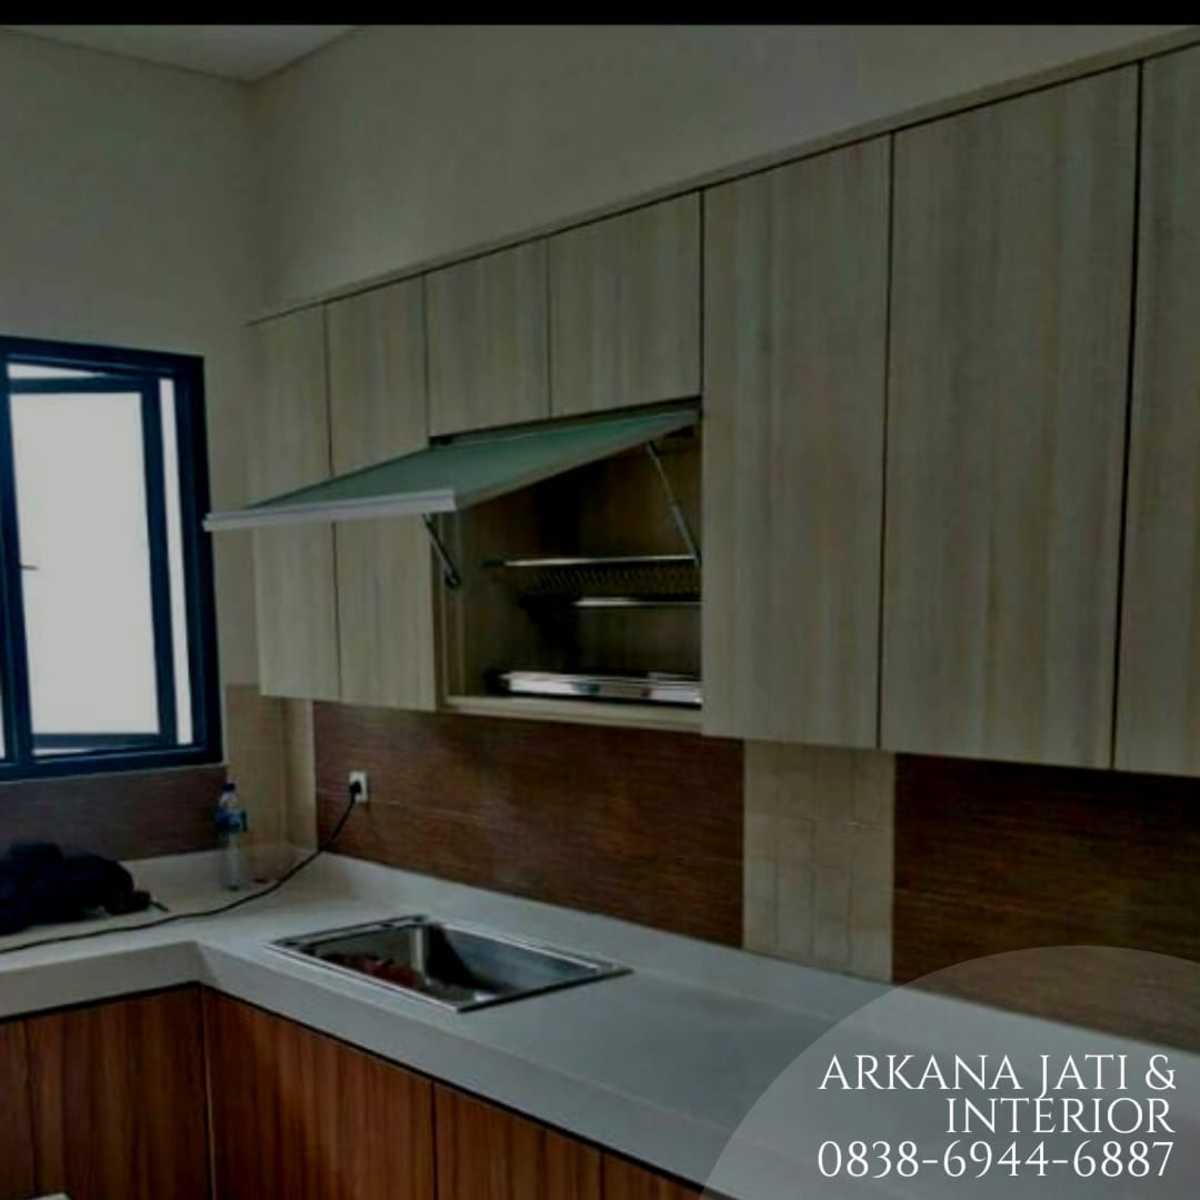 Harga Kitchen Set Murah Di Bandung Architectural Design